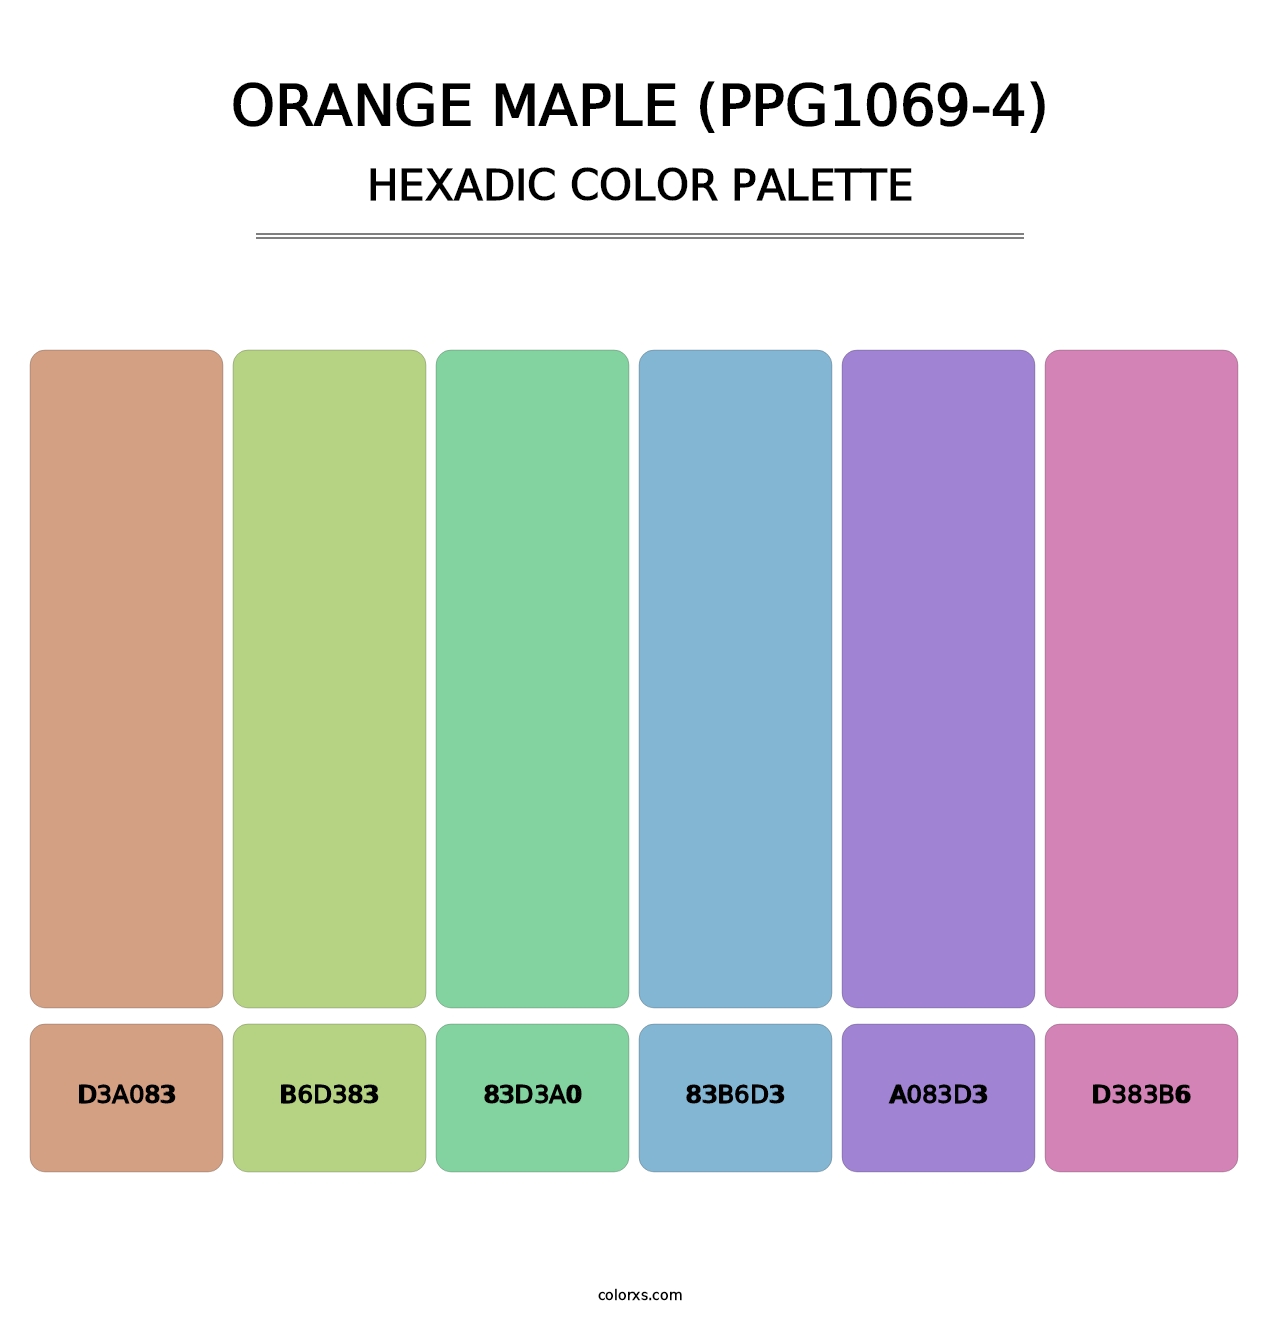 Orange Maple (PPG1069-4) - Hexadic Color Palette